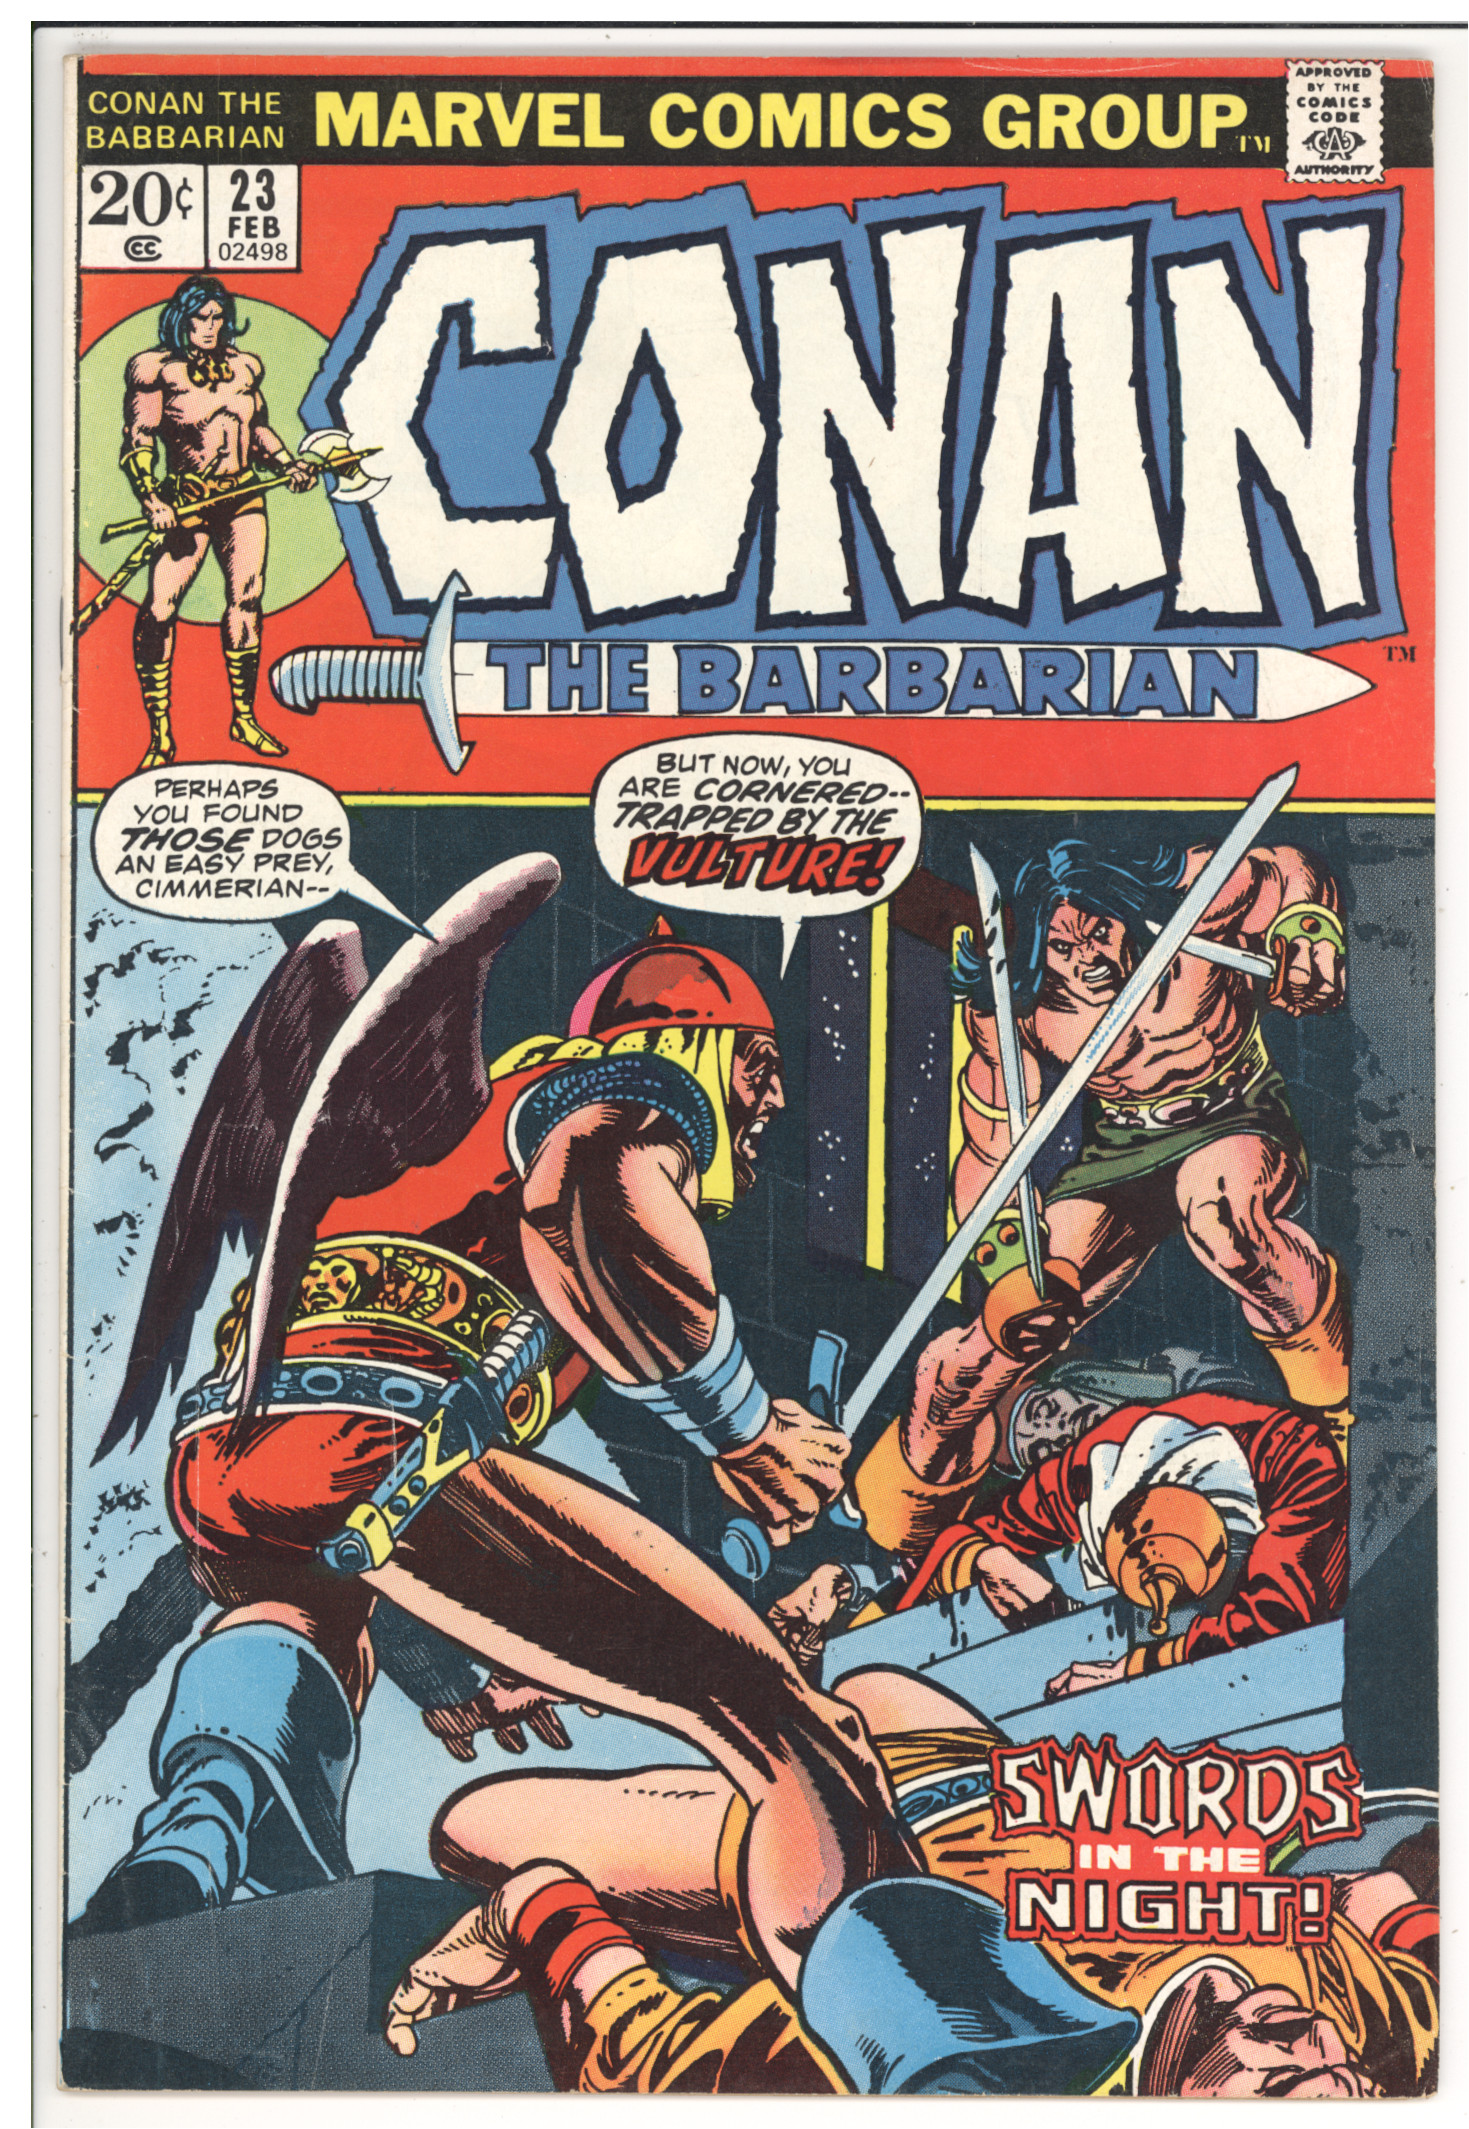 Conan The Barbarian #23 front